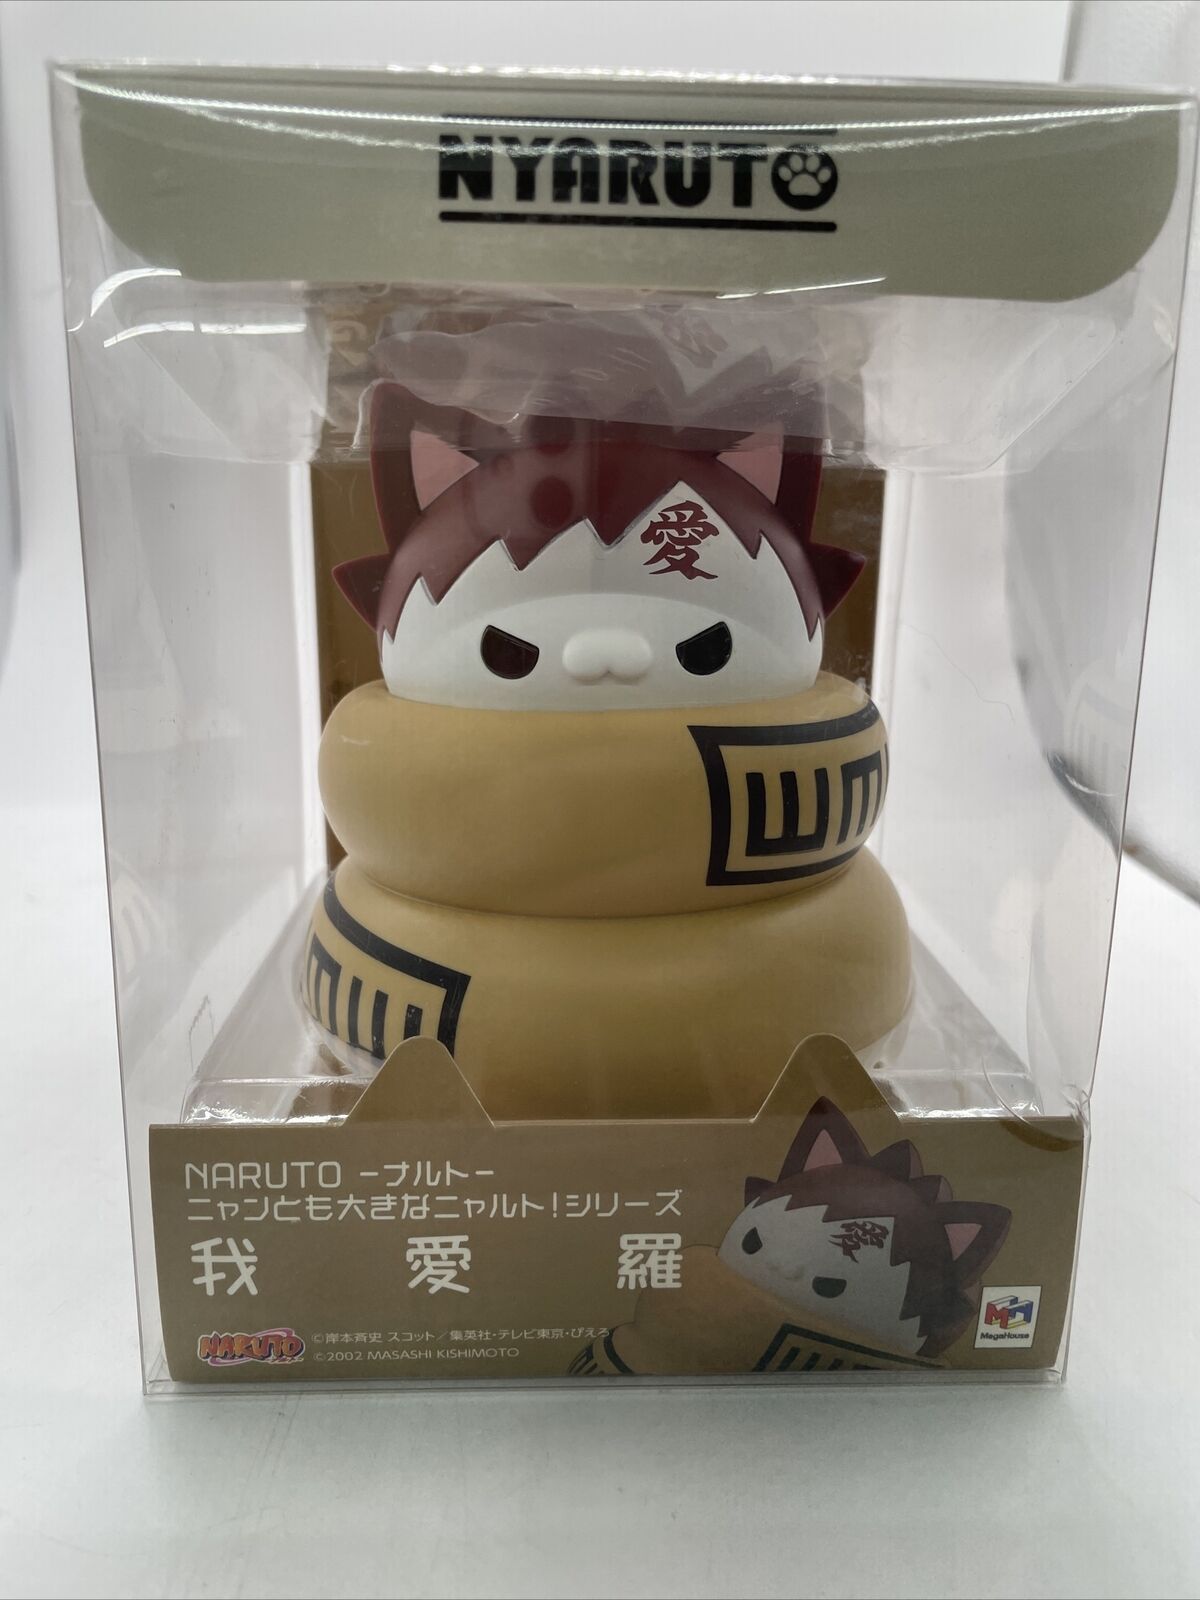 NARUTO Gaara Nyaruto Cat Figure Anime Genuine MegaHouse From Japan Toy UNUSED